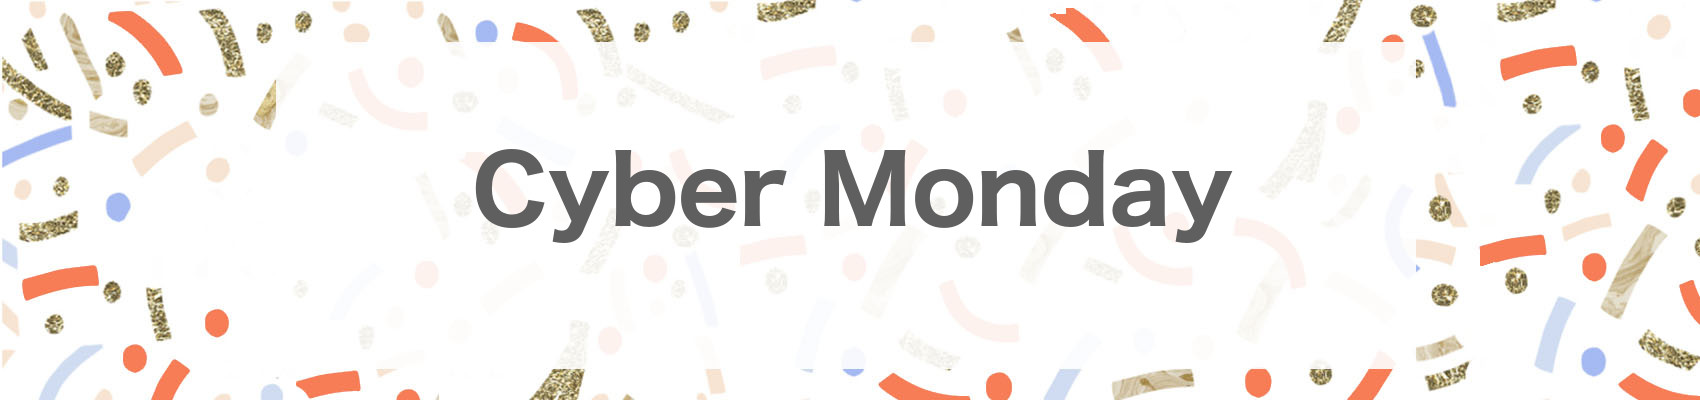 Cyber Monday - Labs64 NetLicensing 2.3.4